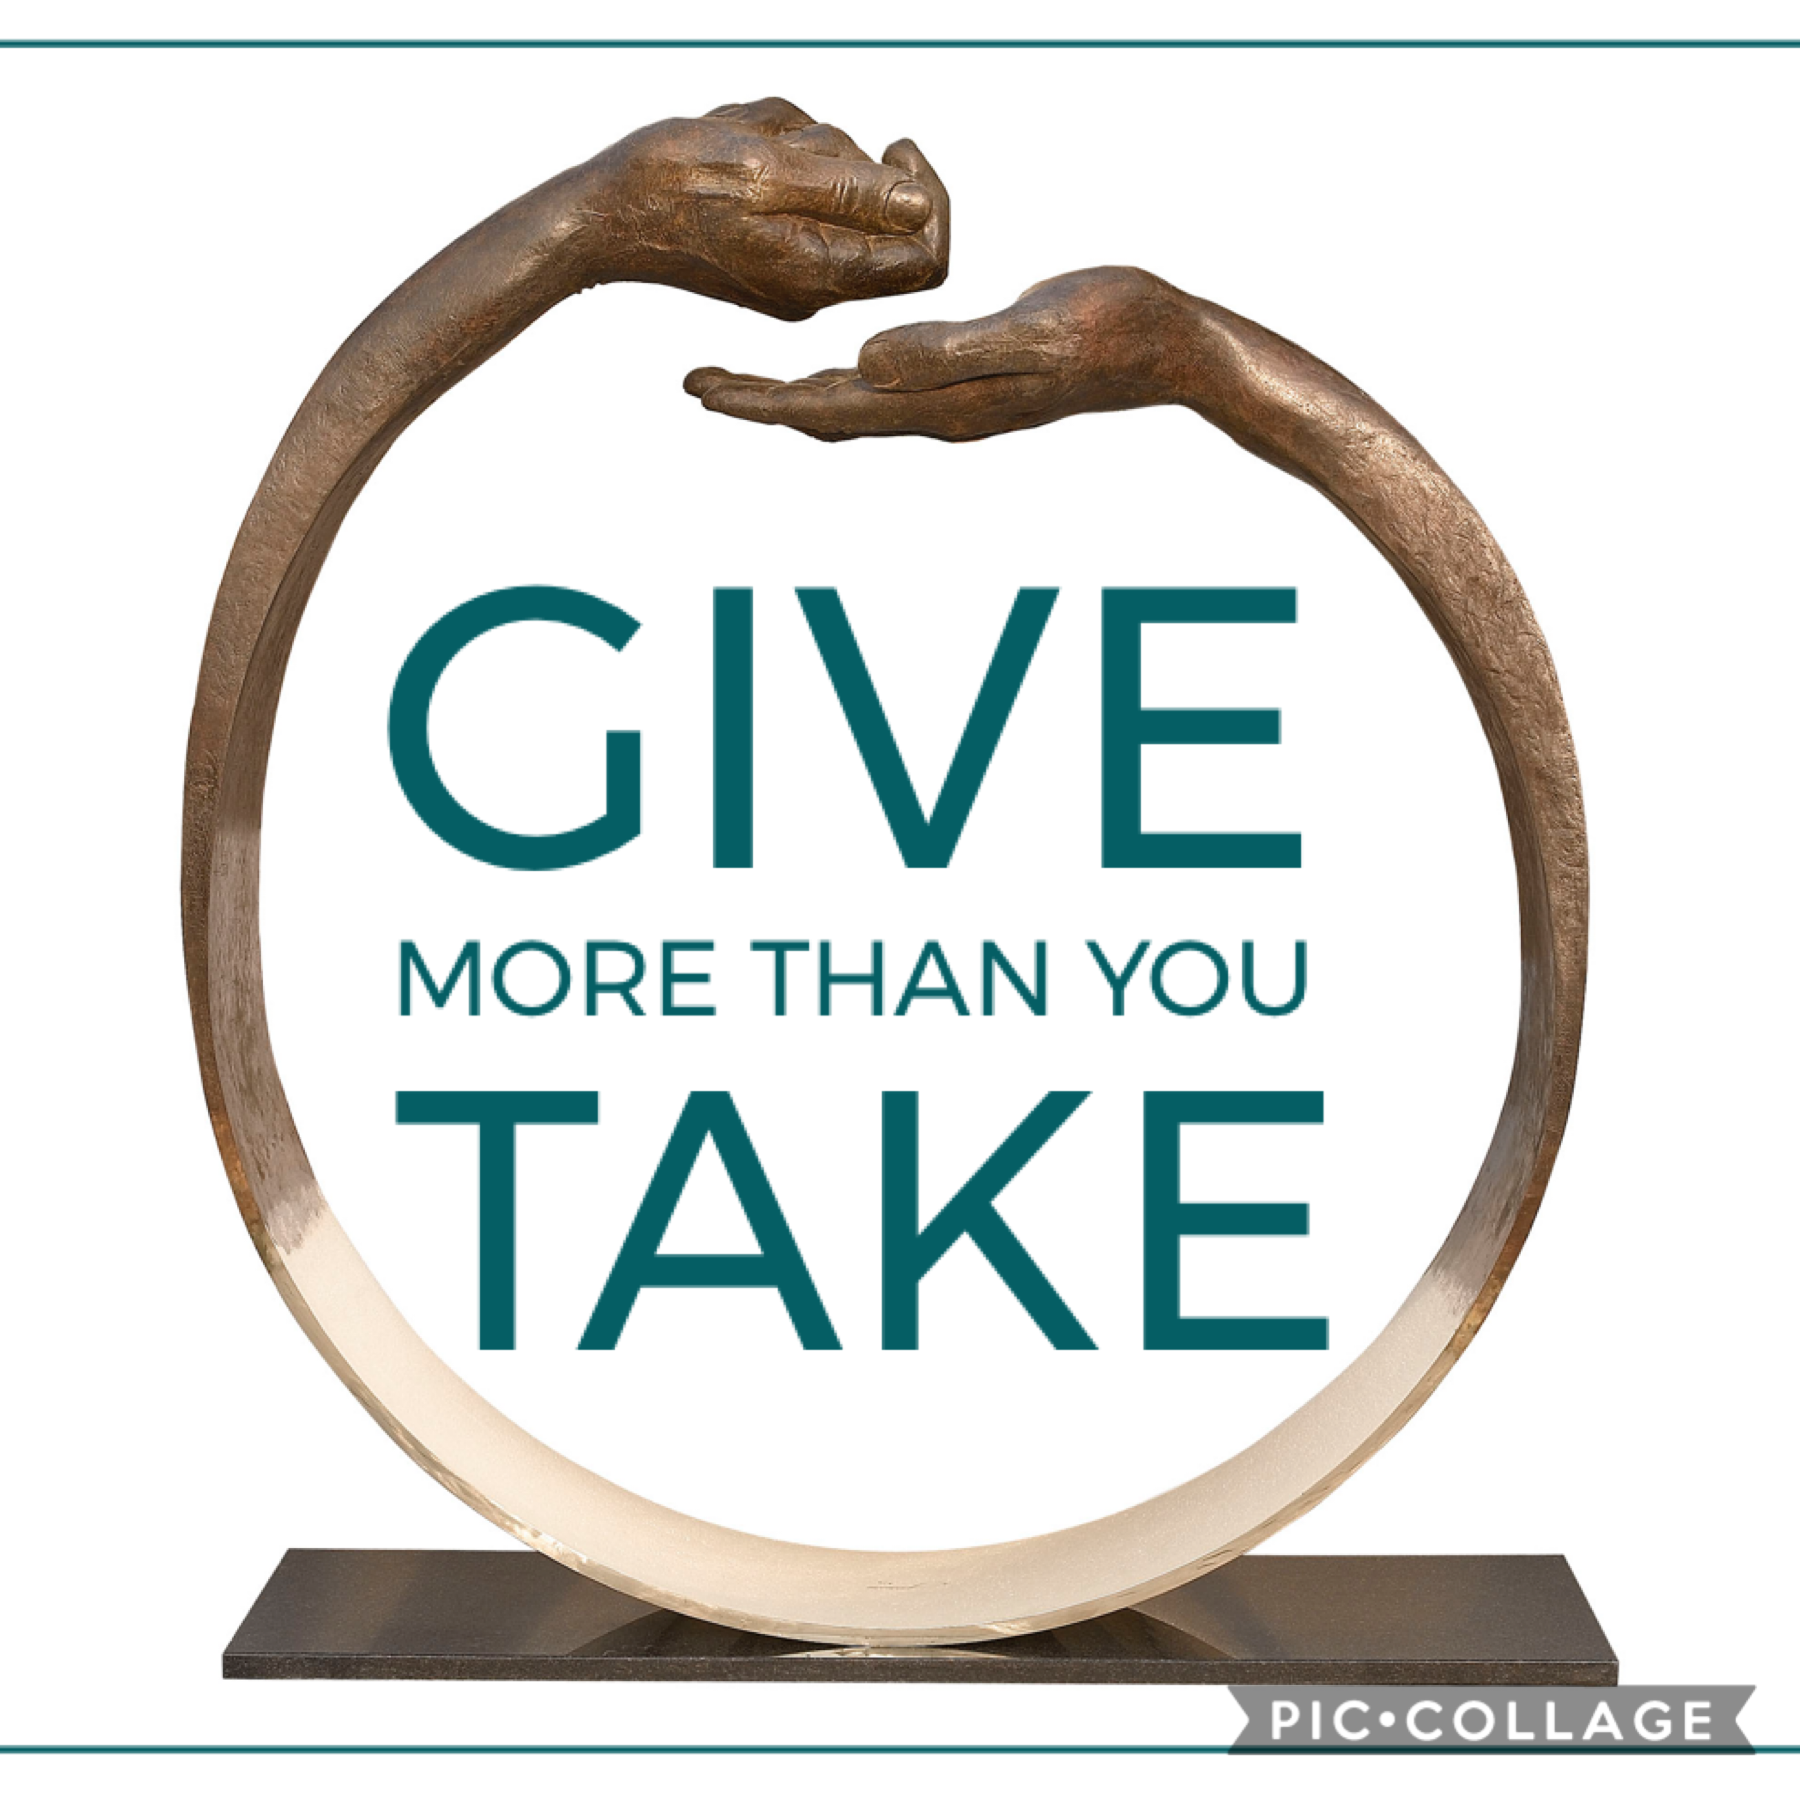 Give more than you take